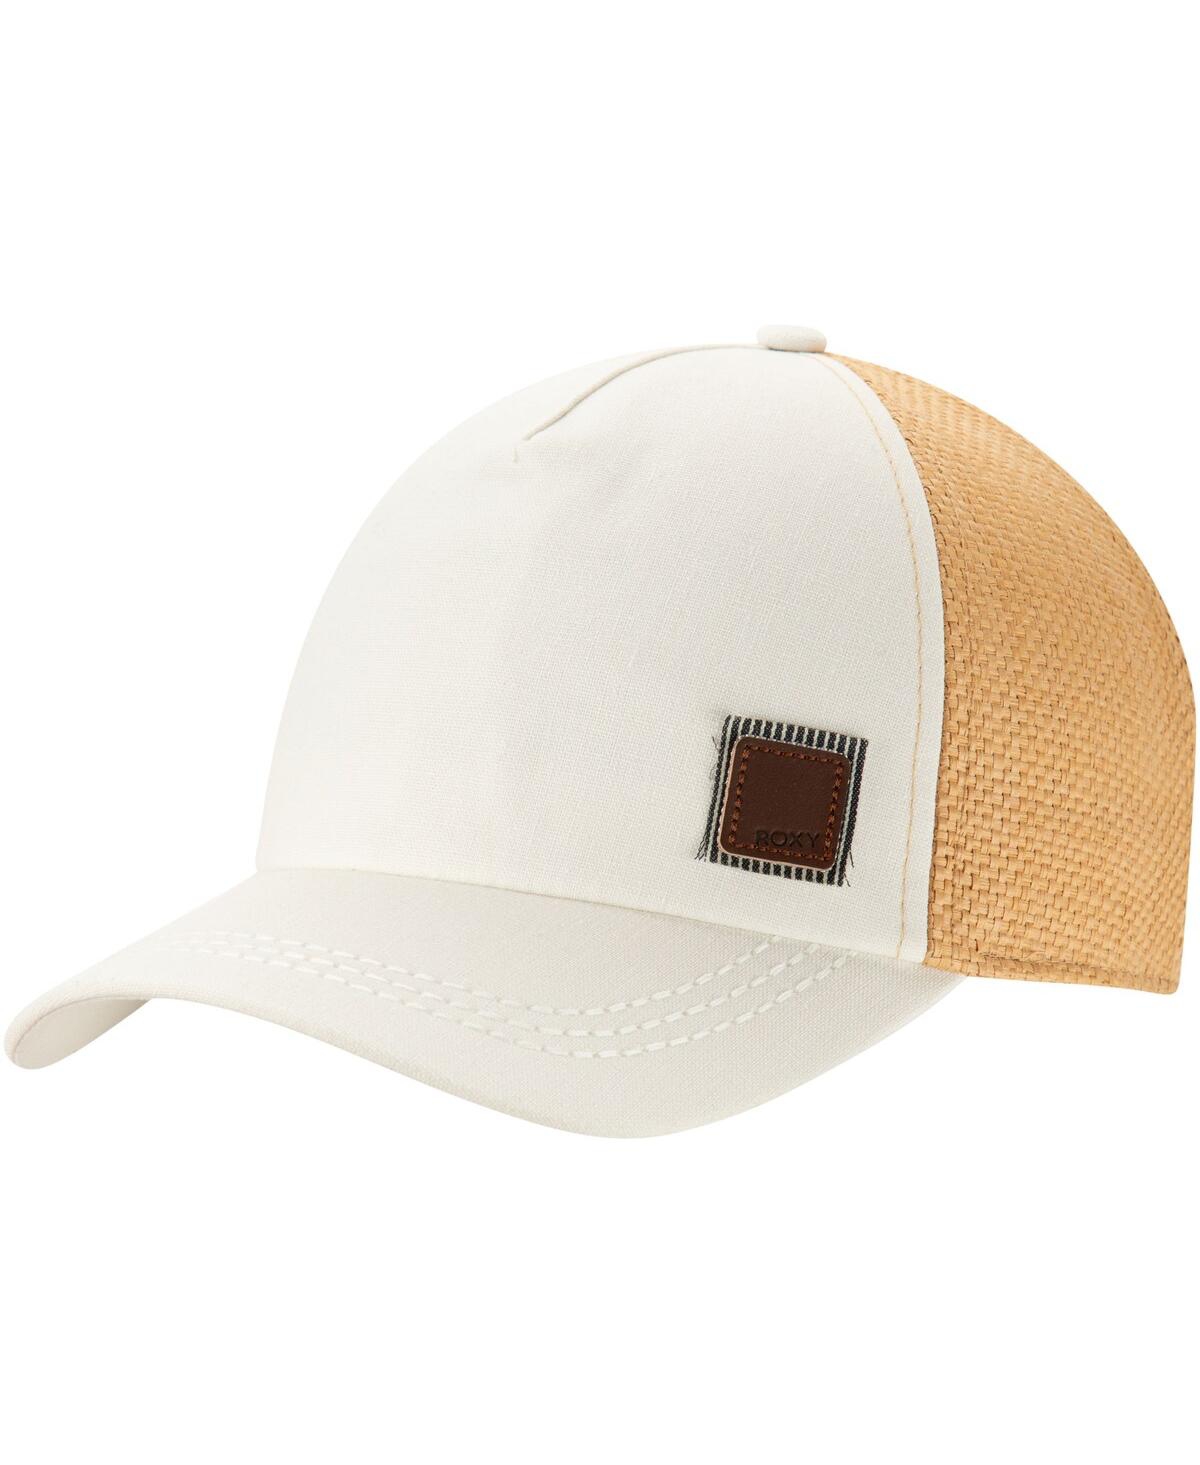 Shop Roxy Women's Quiksilver White  Incognito Adjustable Trucker Hat